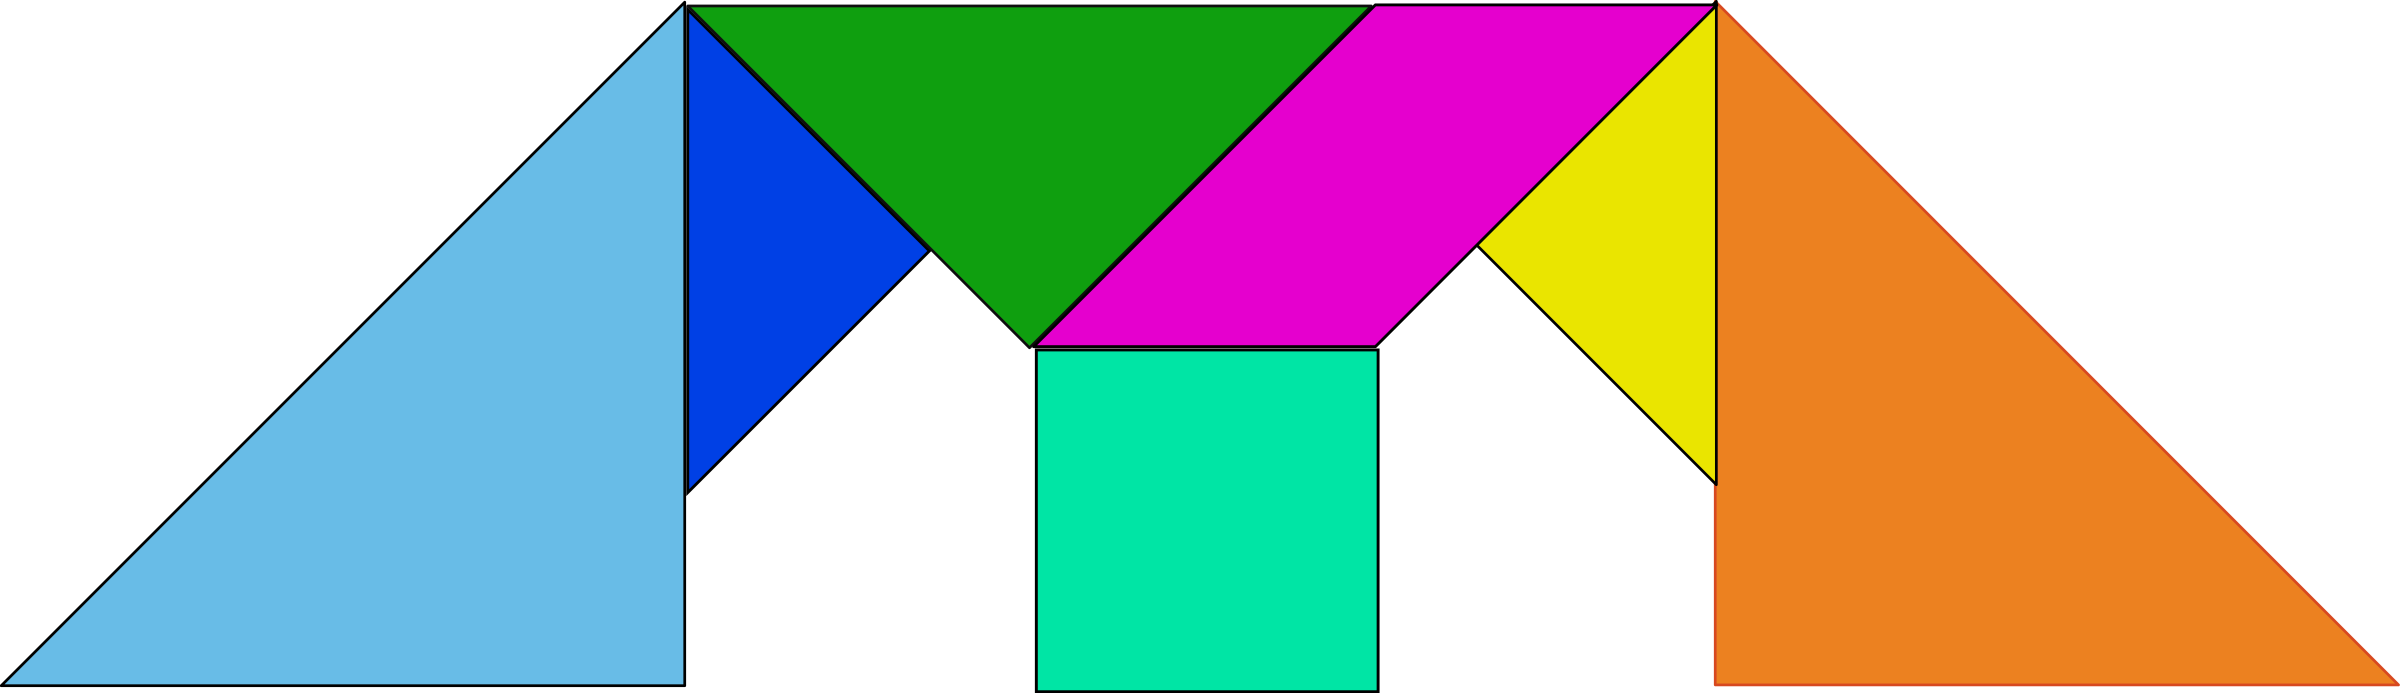 Big Image - Tangram Of Letter M (2400x693)